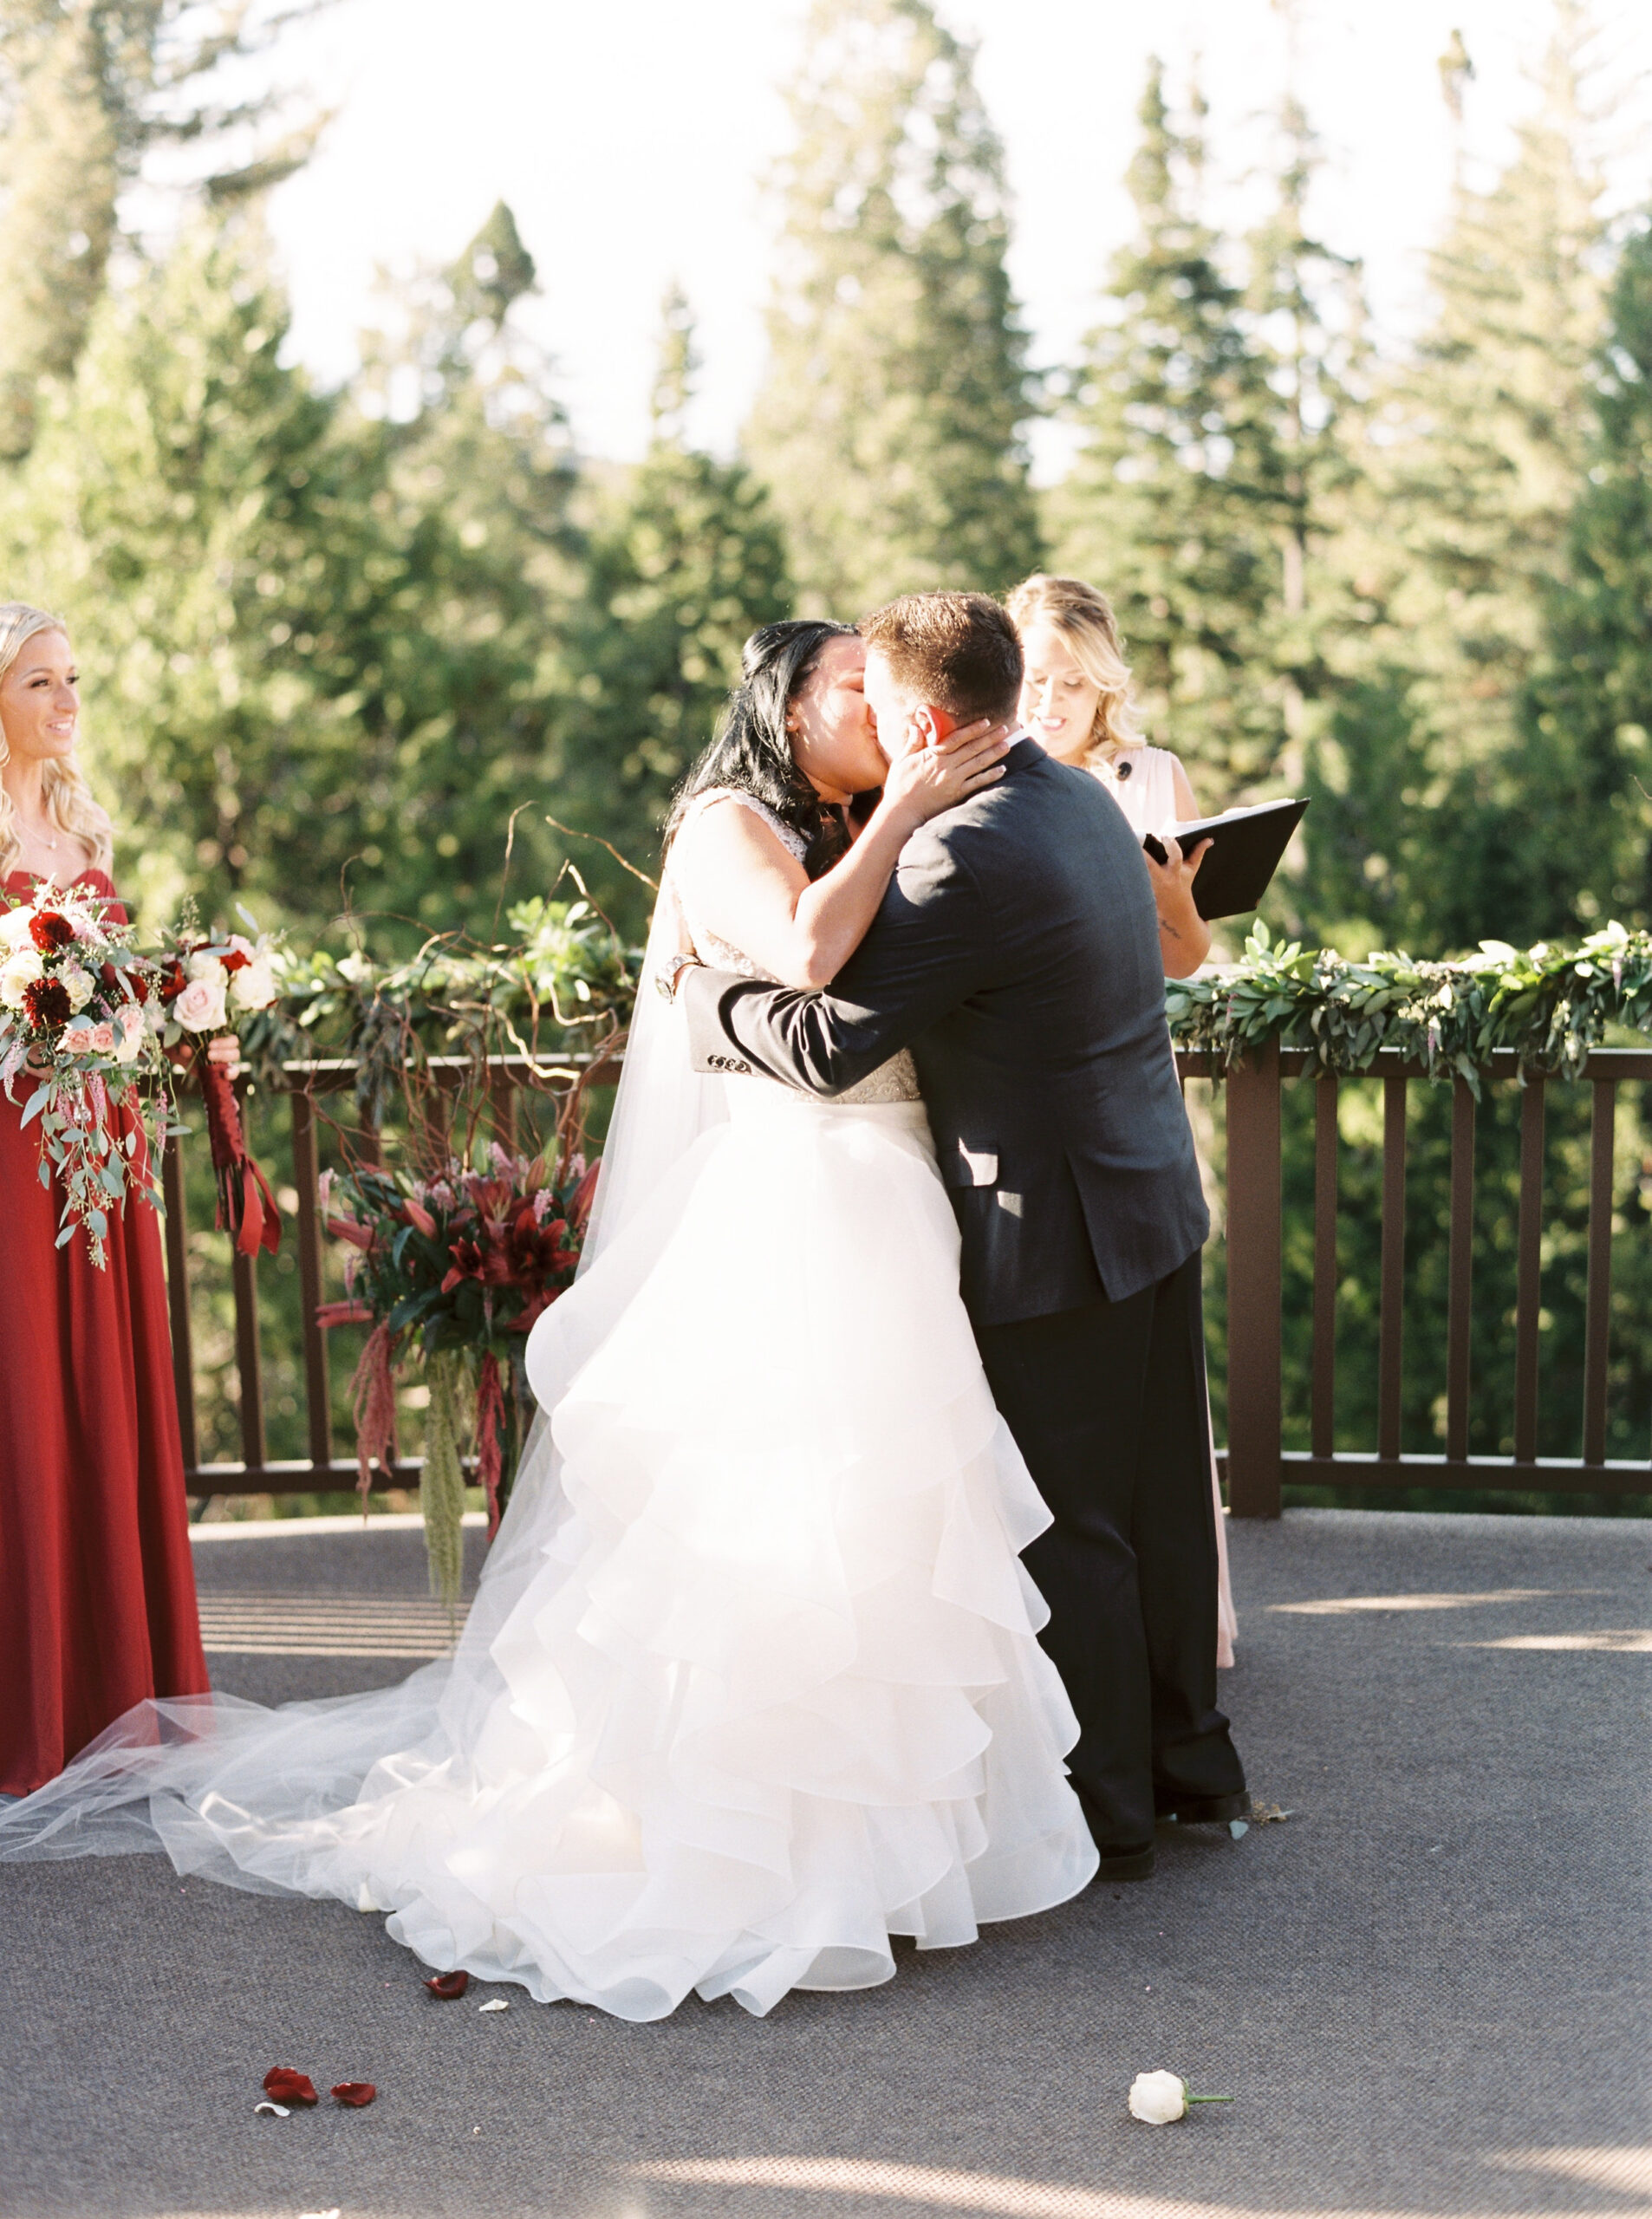 Tenaya-lodge-wedding-at-yosemite-national-park-california-82.jpg